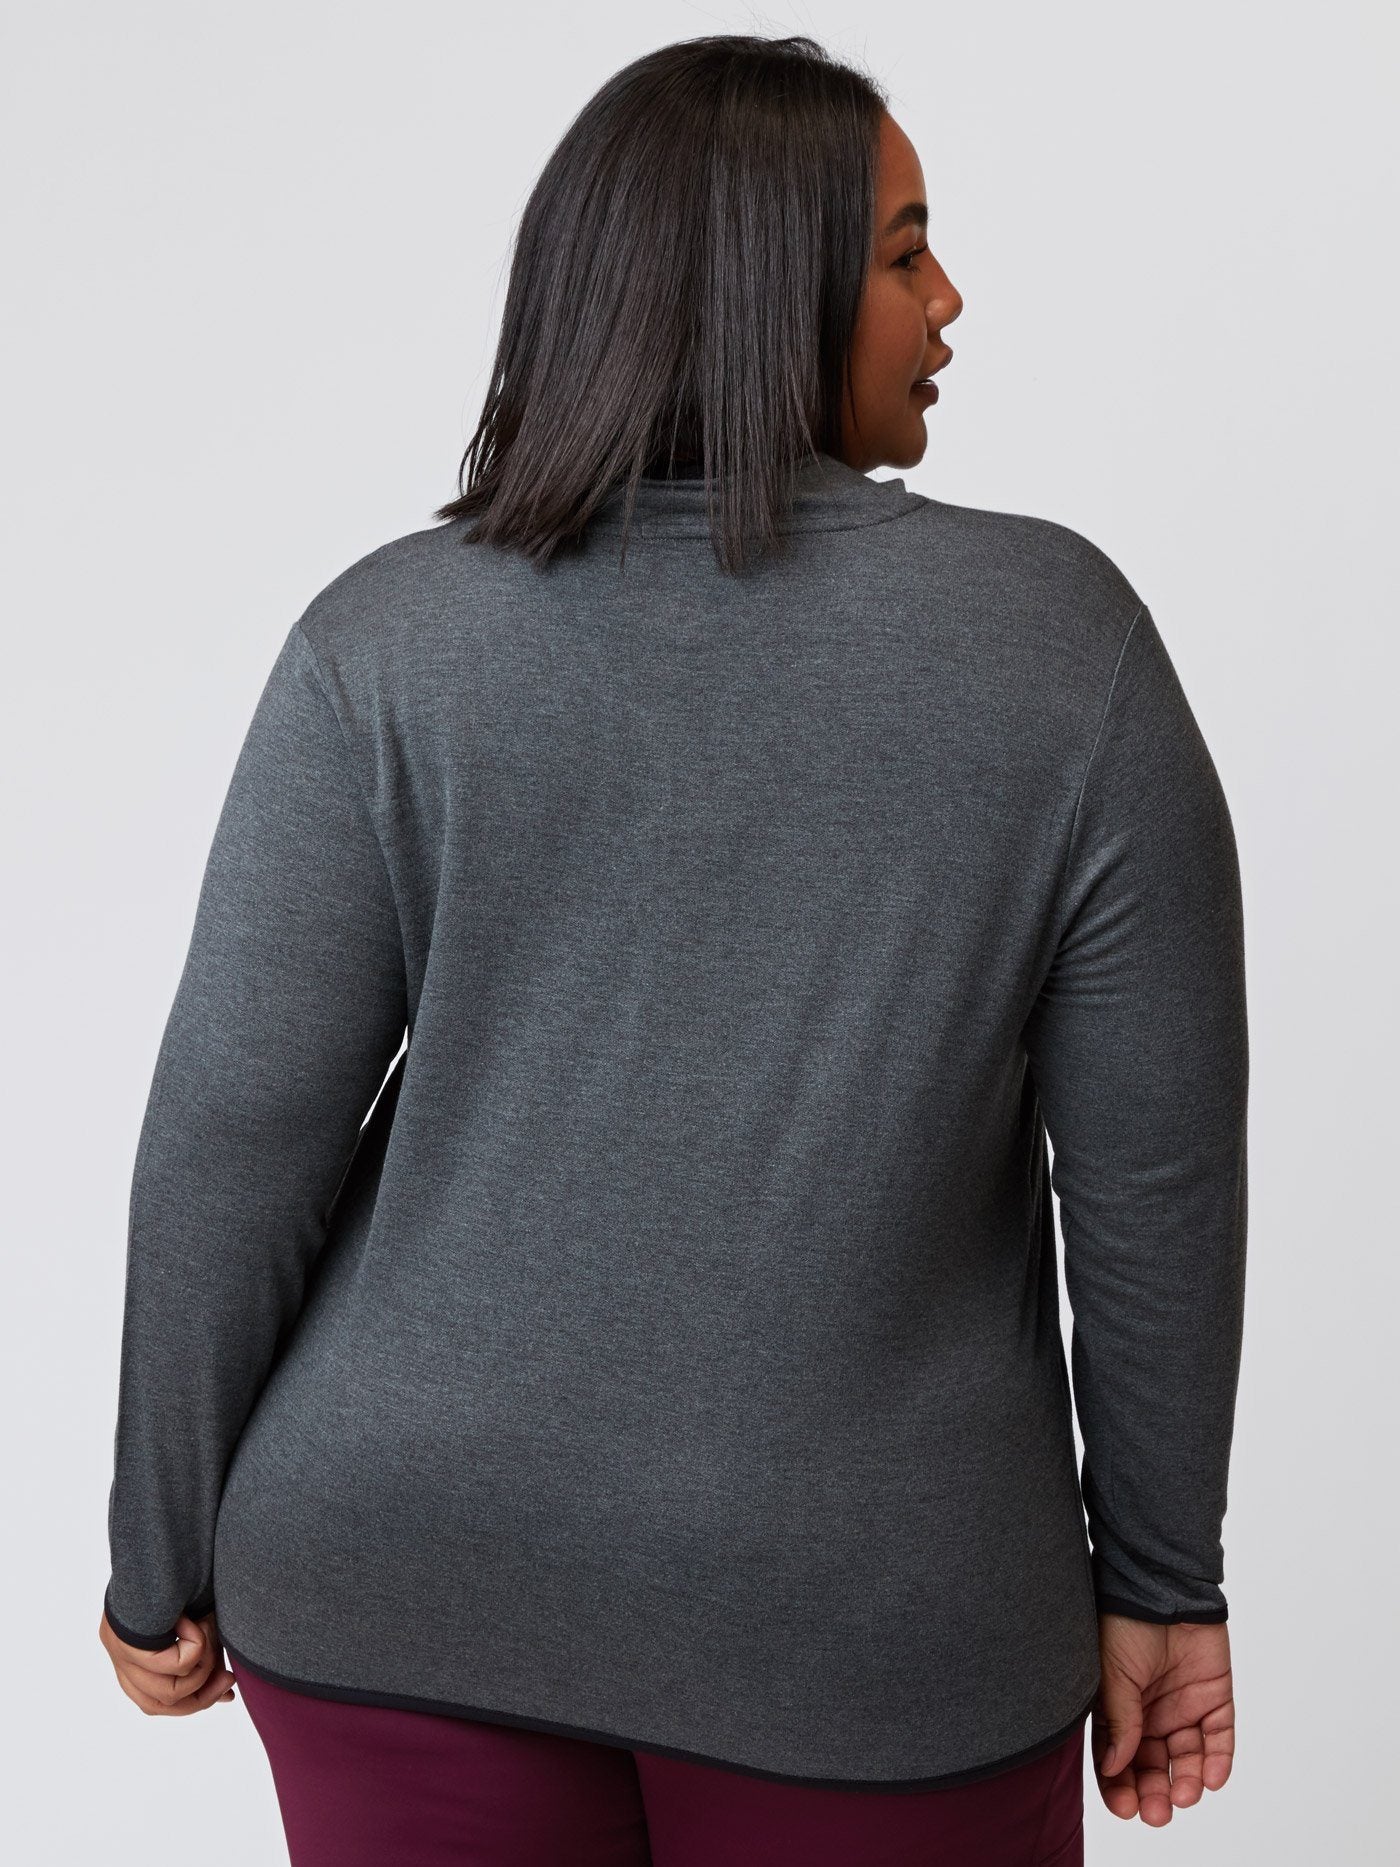 Feather Fleece 1/4 Zip Mock Neck Womens Outerwear Sweatshirt Threads 4 Thought